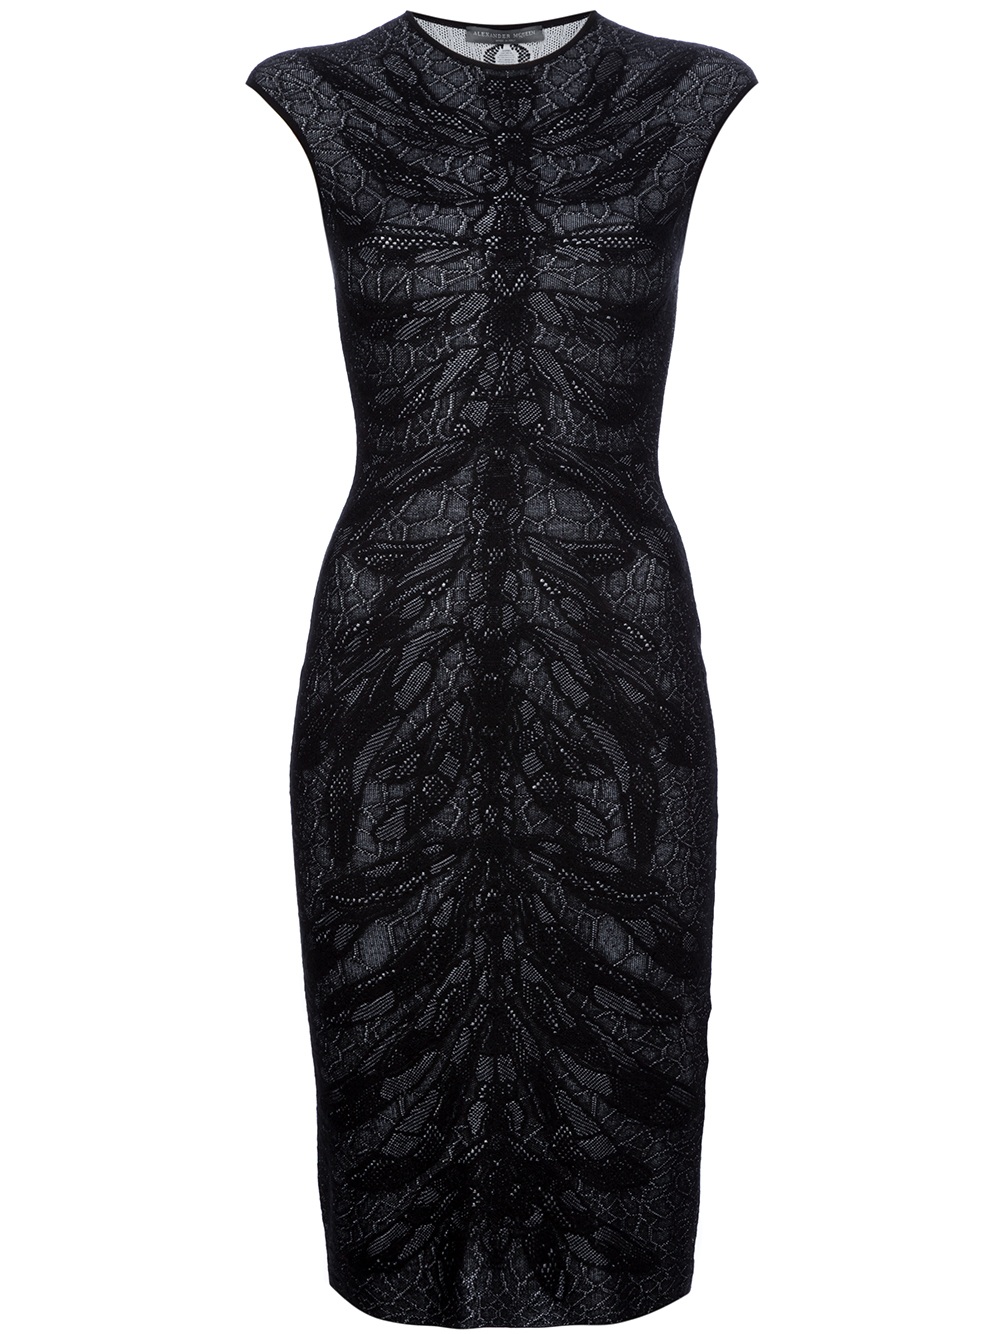 Lyst - Alexander Mcqueen Jacquard Textured Dress in Black